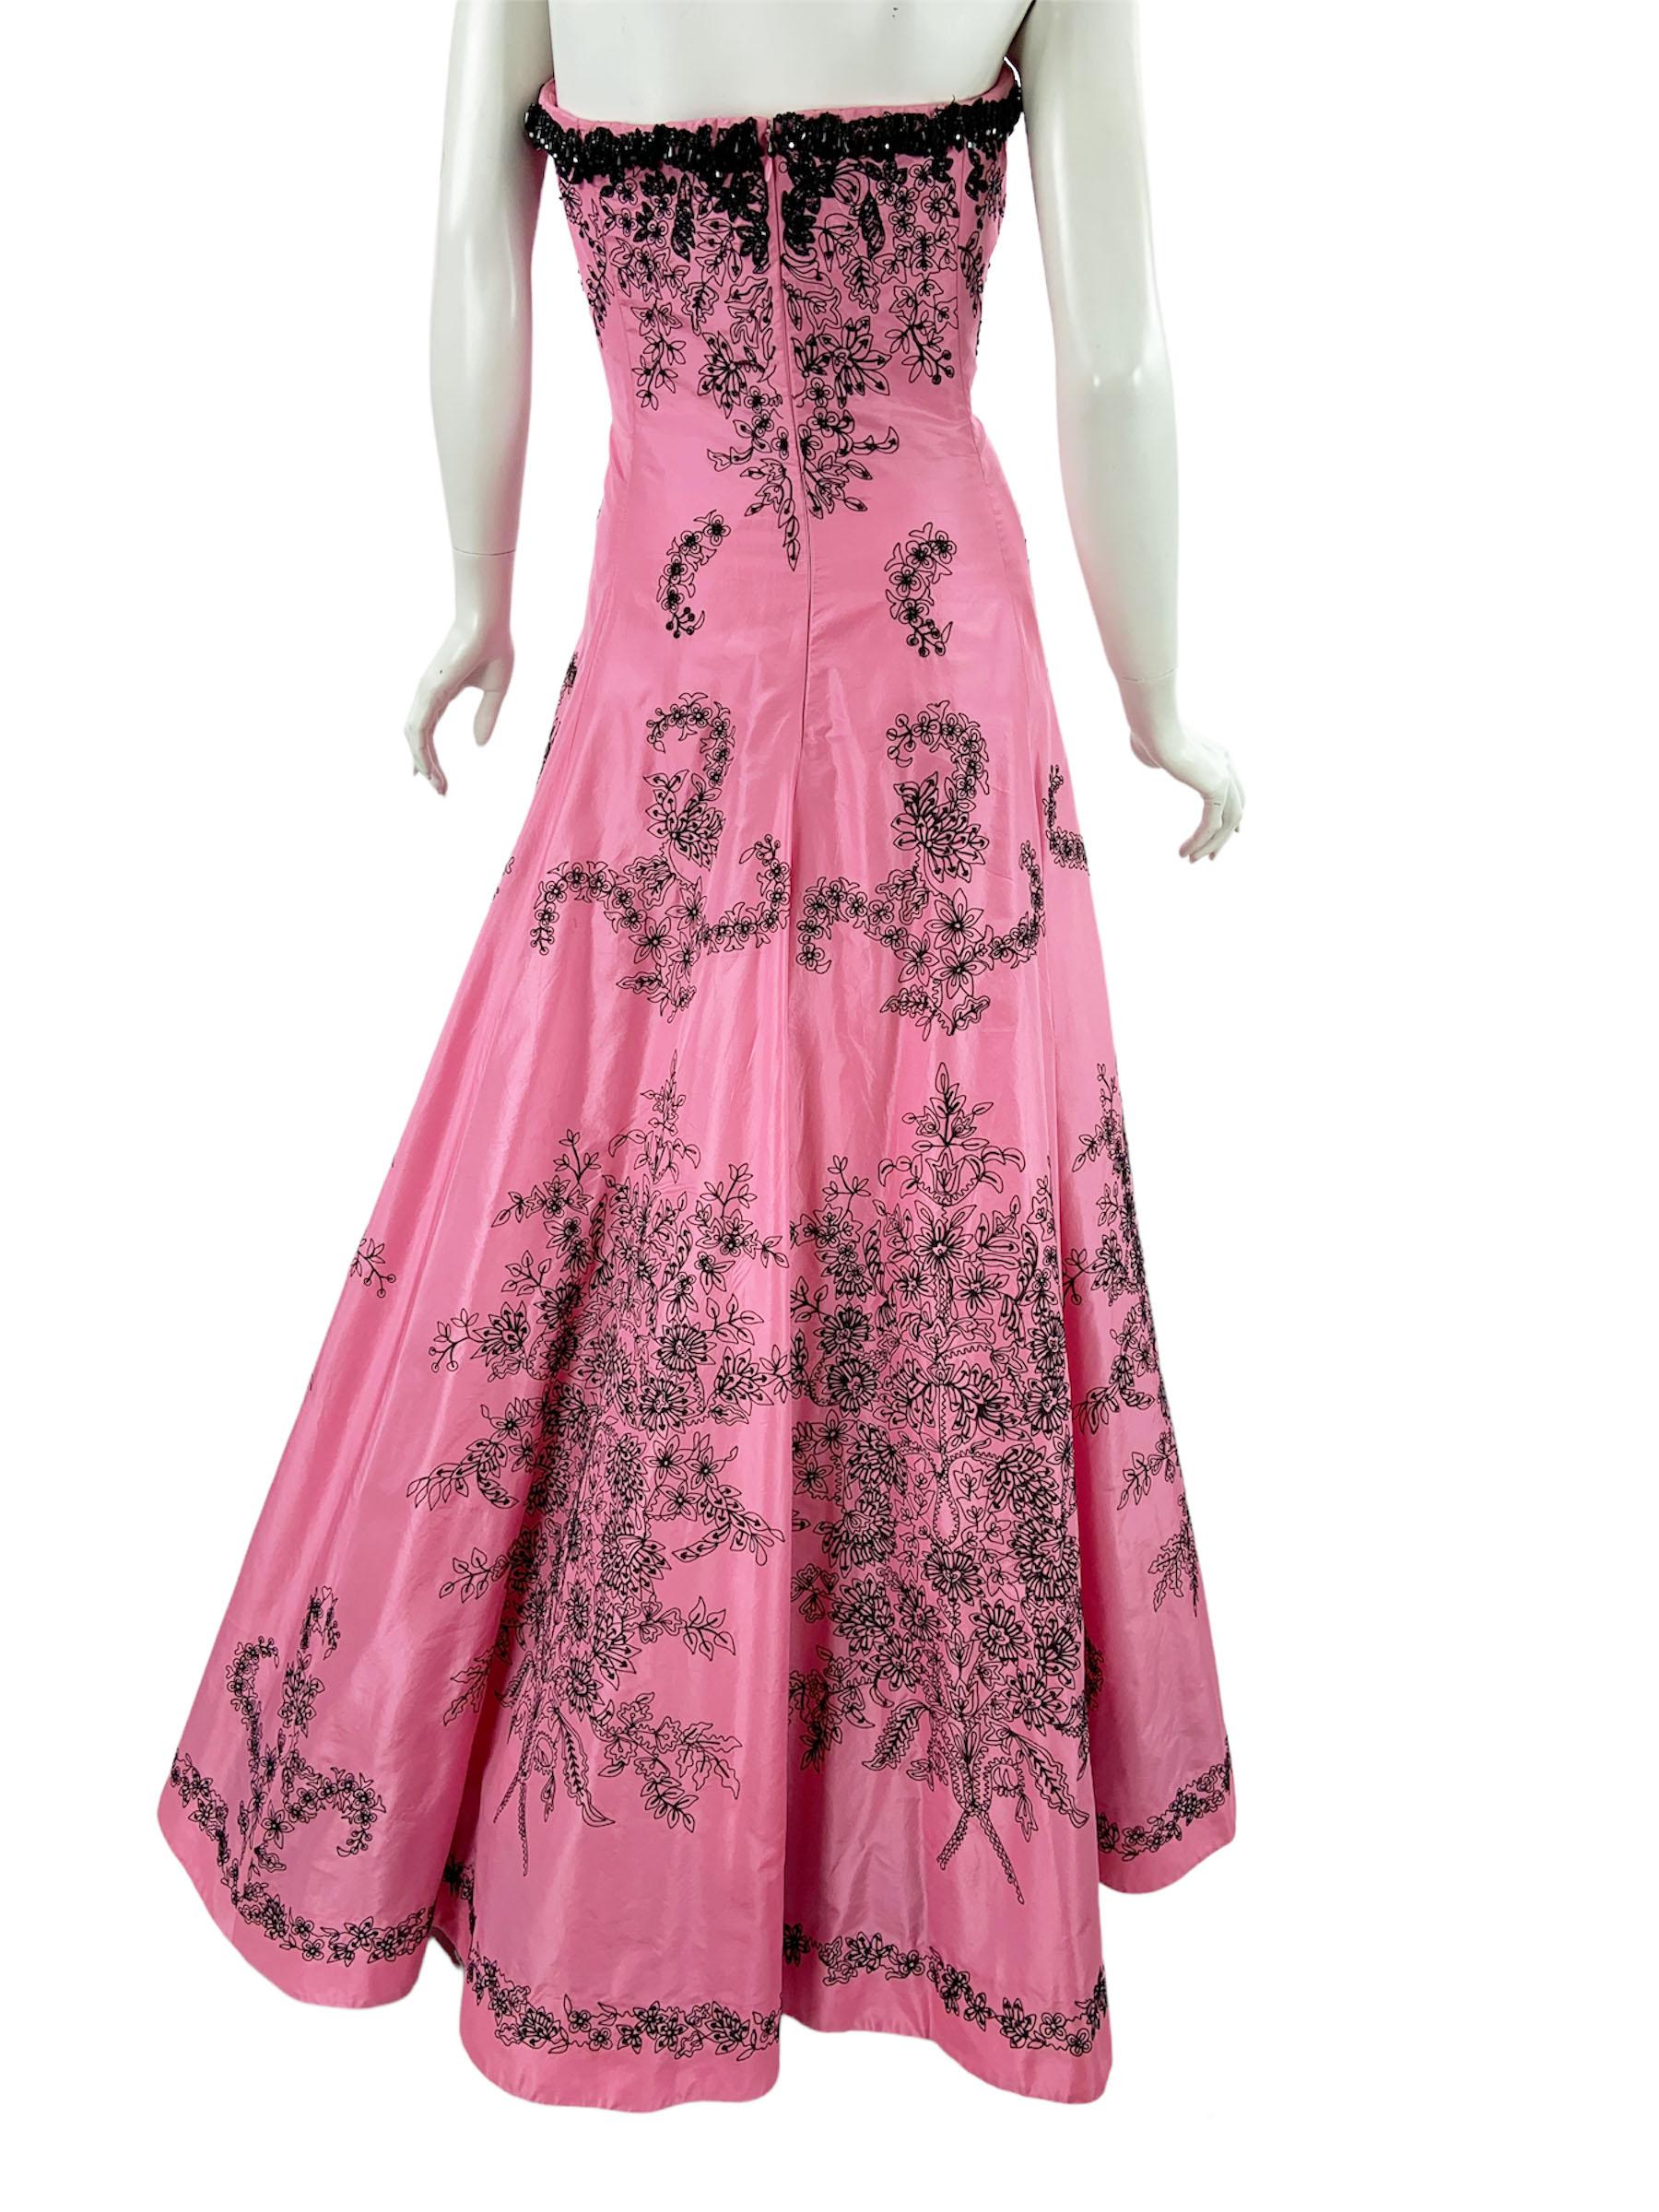 Women's Oscar de la Renta S/S 2004 Collection Pink Silk Taffeta Embellished Dress Gown 8 For Sale